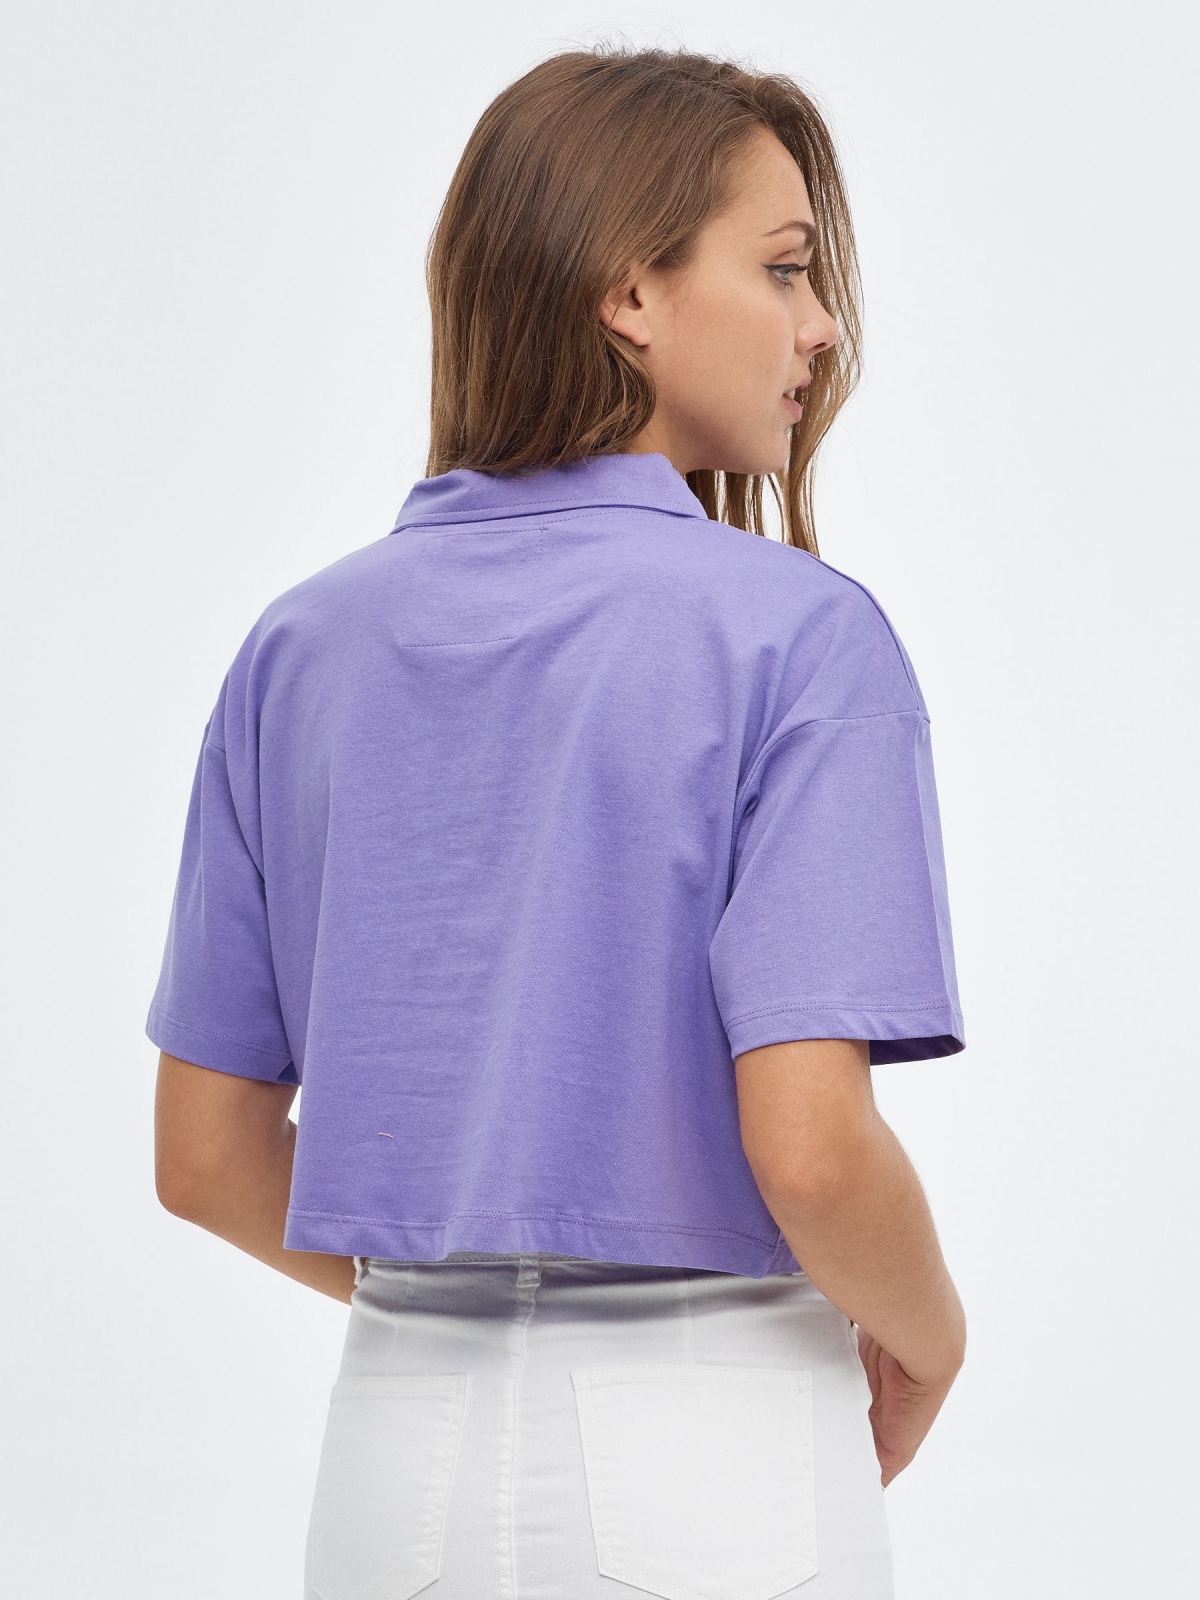 Camiseta polo bordado lila vista media trasera